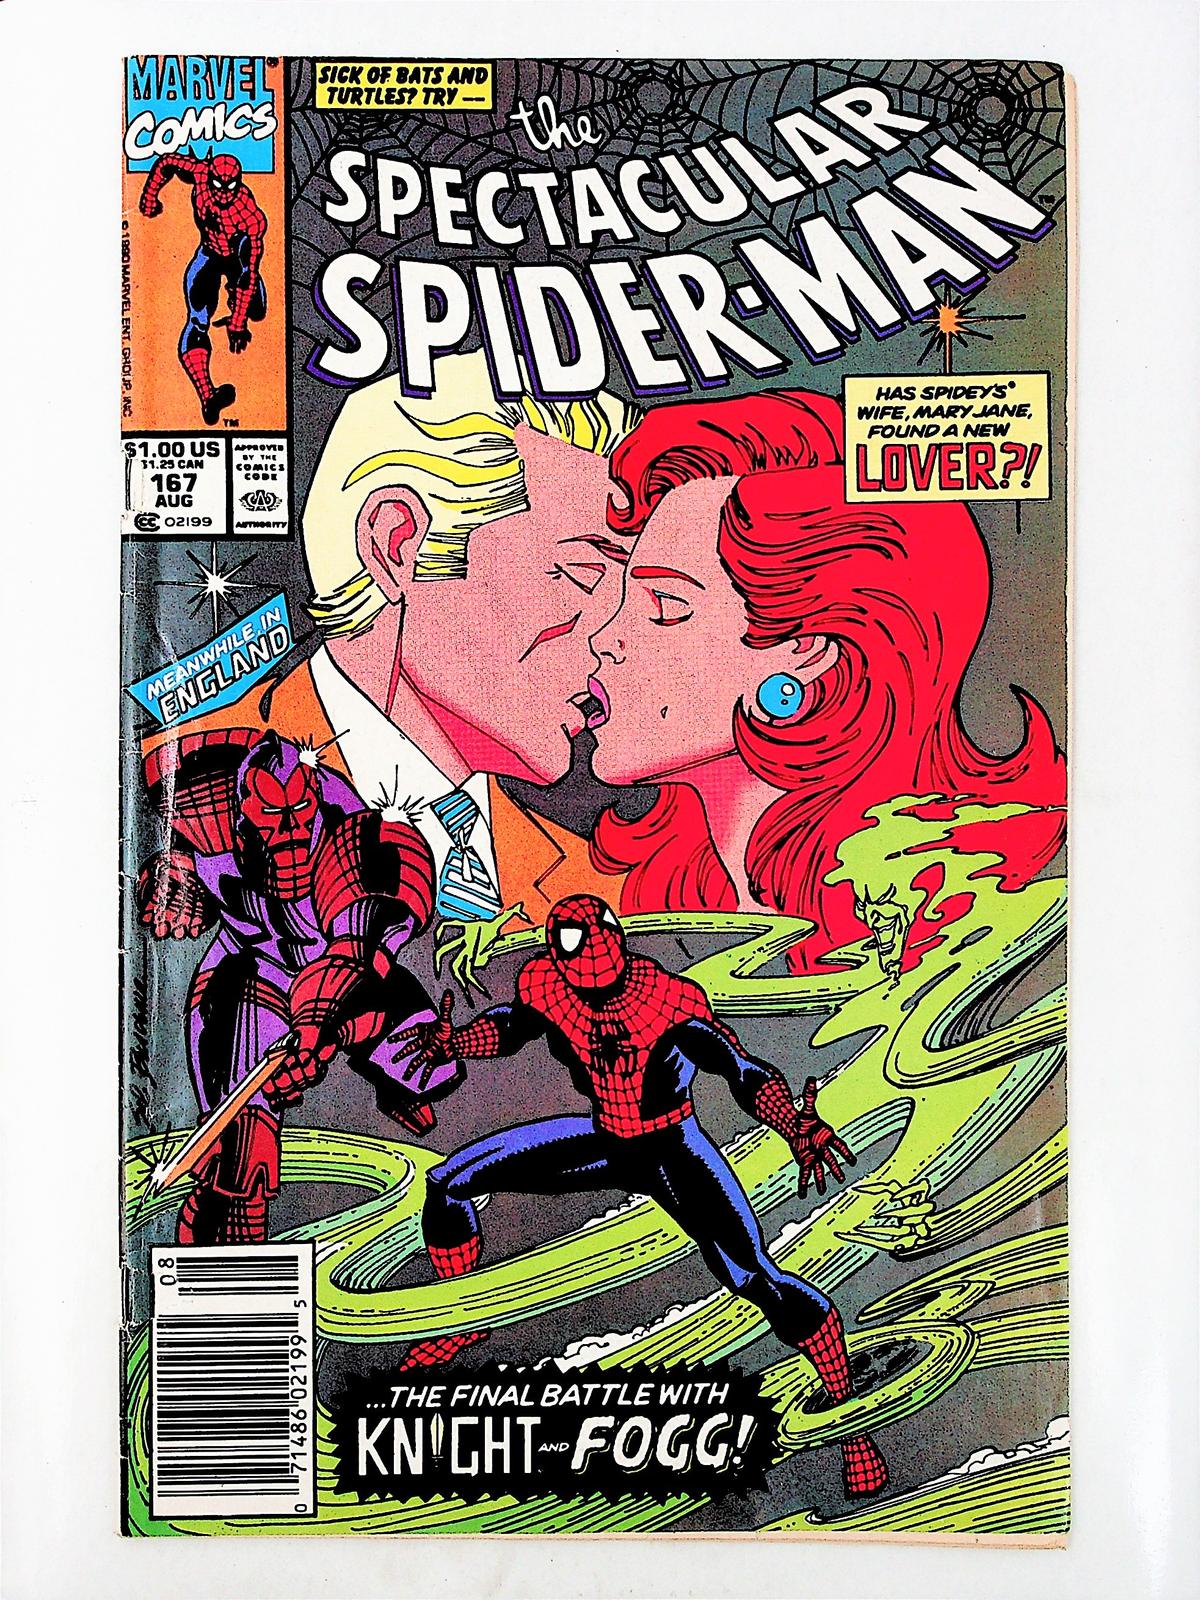 The Spectacular Spider-Man, Vol. 1 # 167